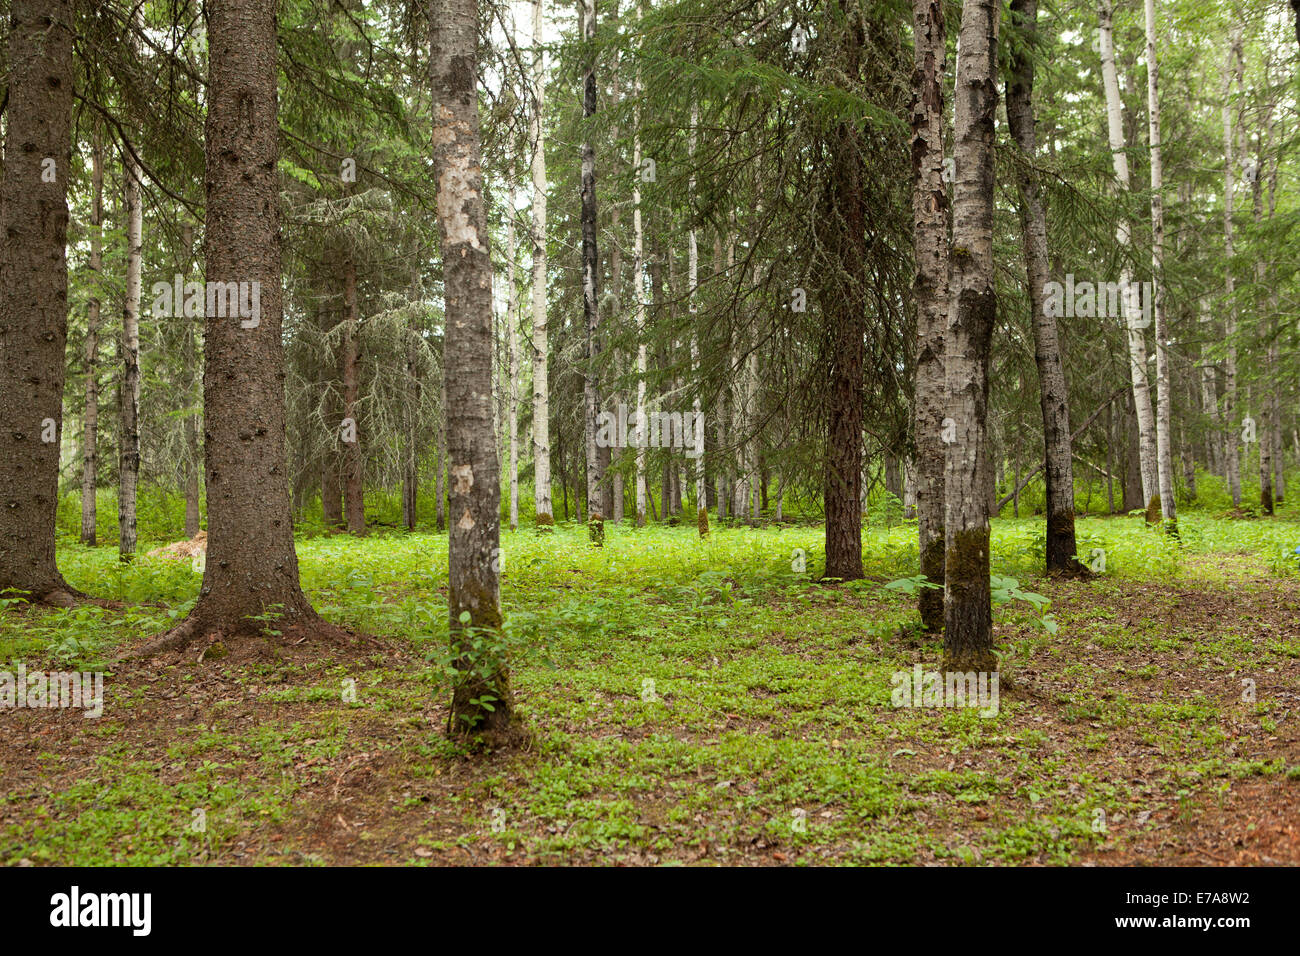 La forêt boréale, le nord de l'Alberta, Canada Banque D'Images